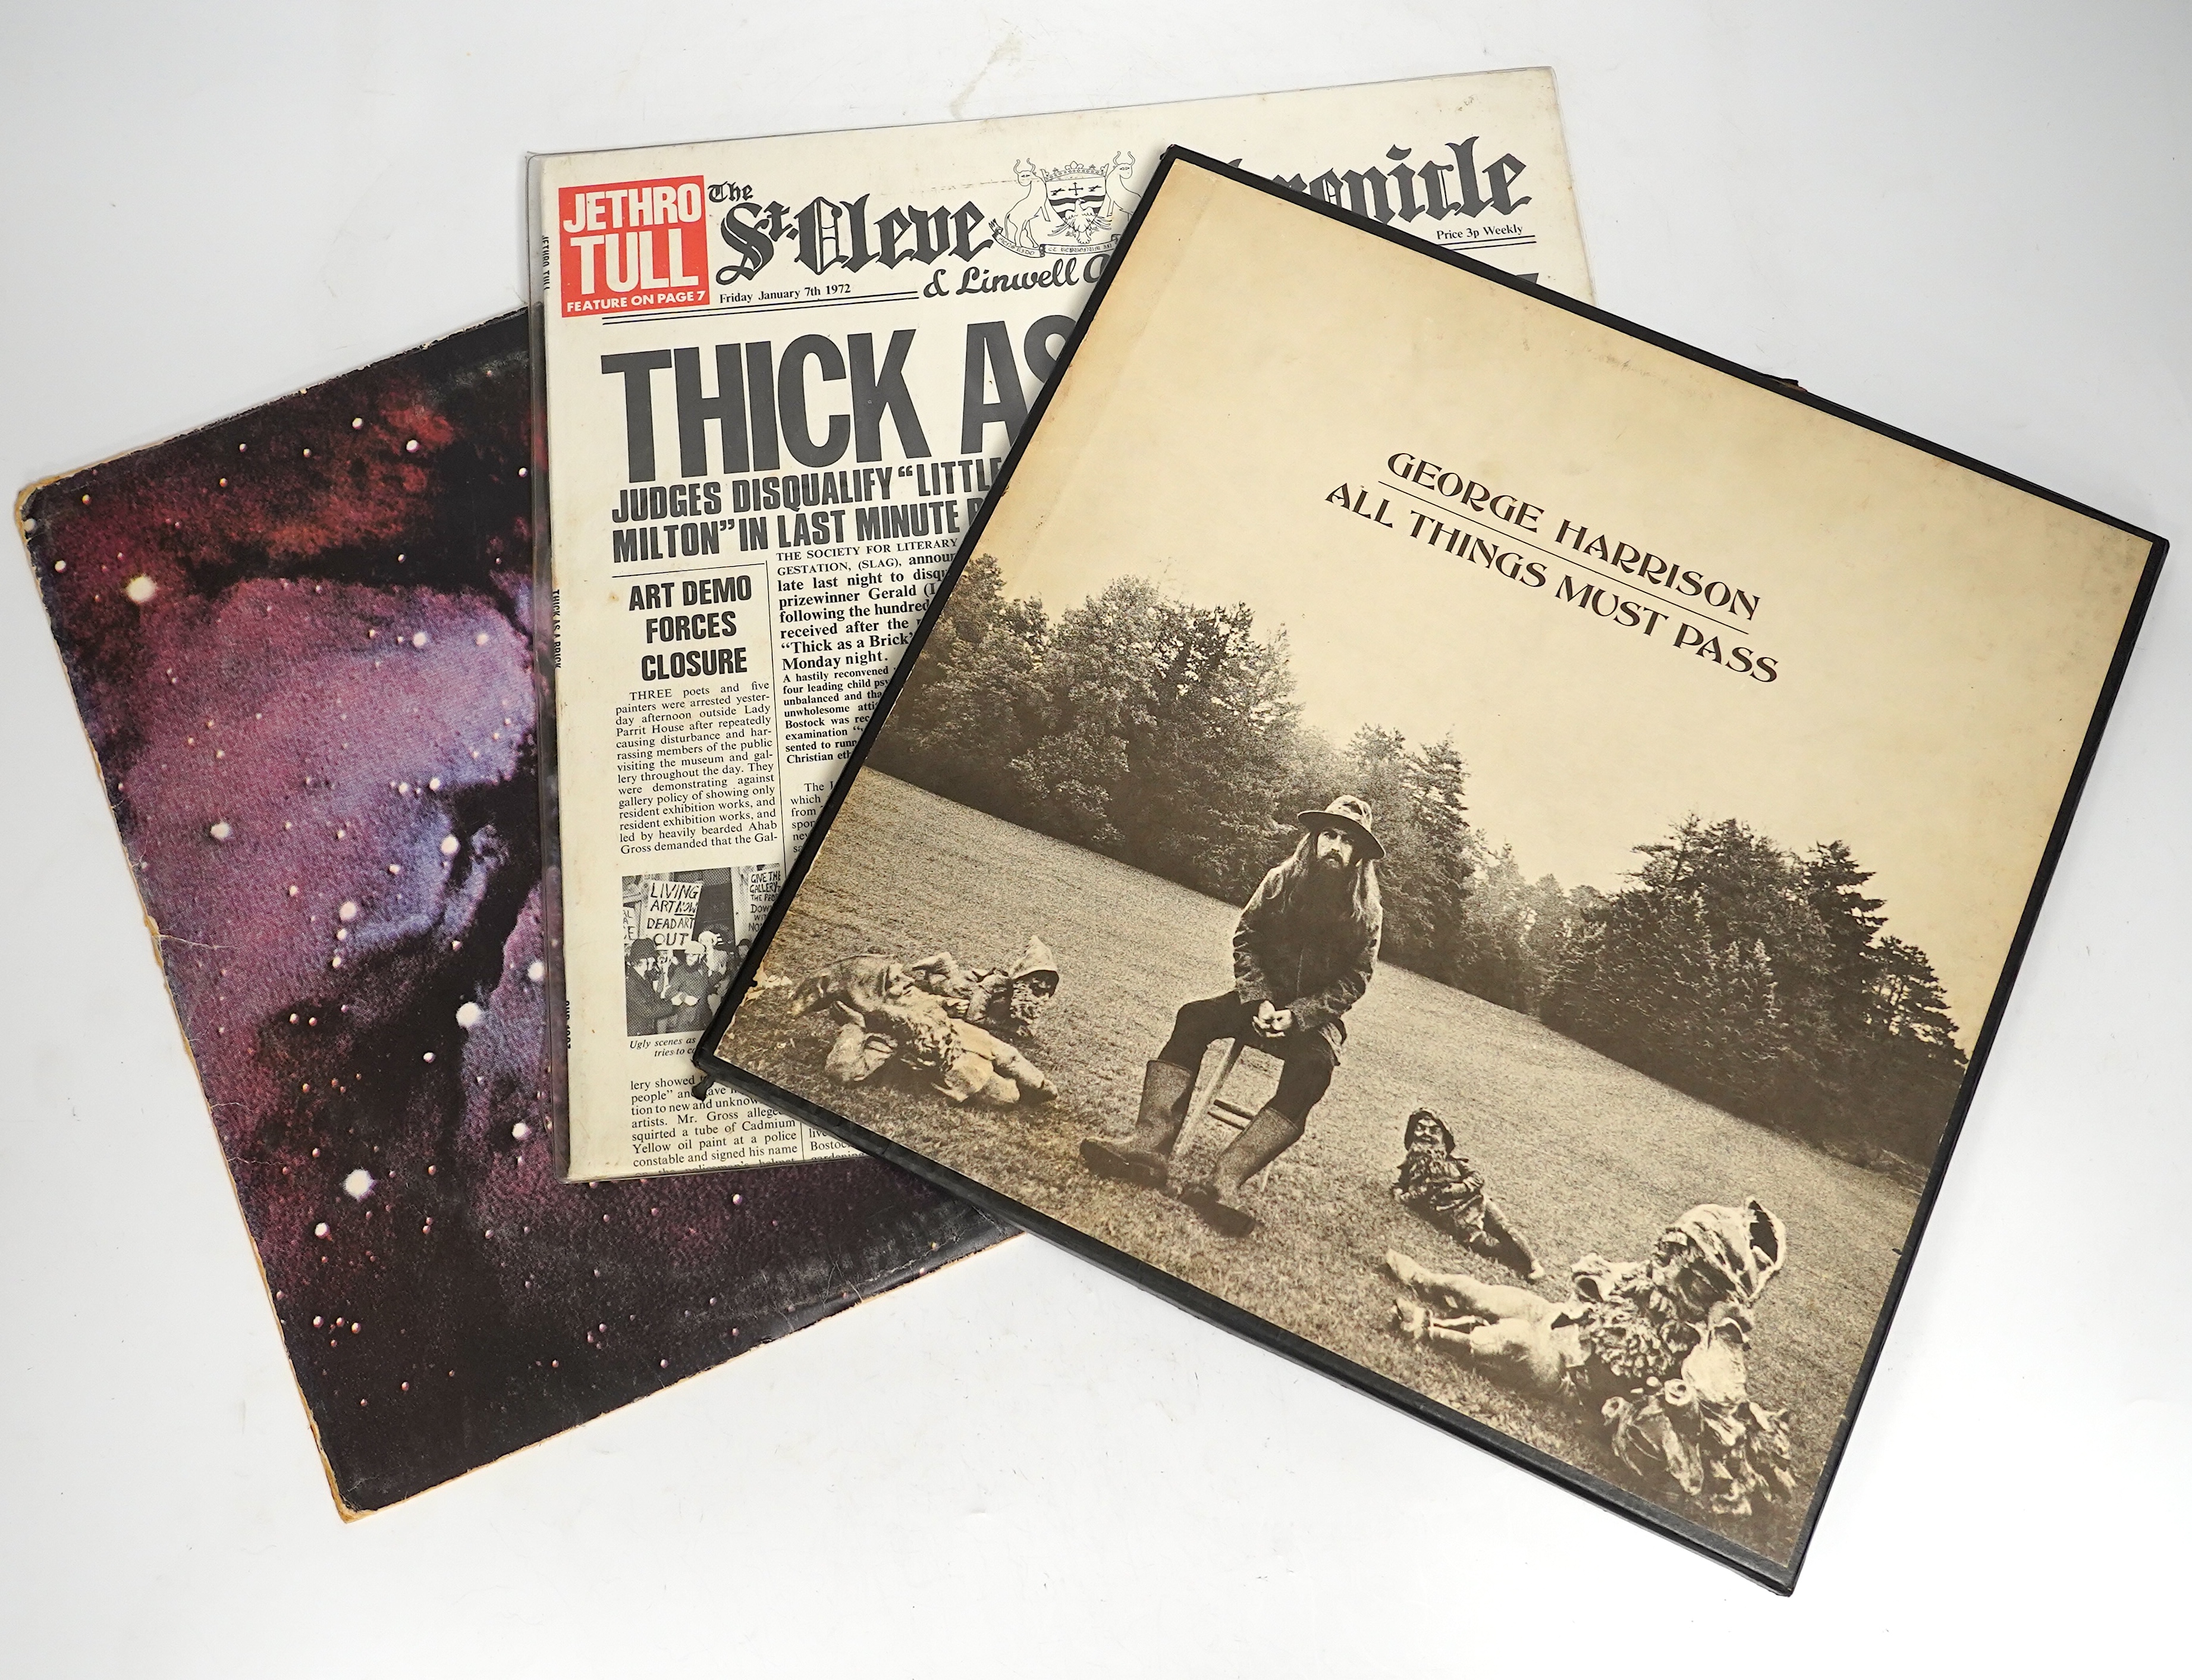 Twenty-five LP records by artists including; George Harrison, Jethro Tull, Grateful Dead, Rod Stewart, etc.